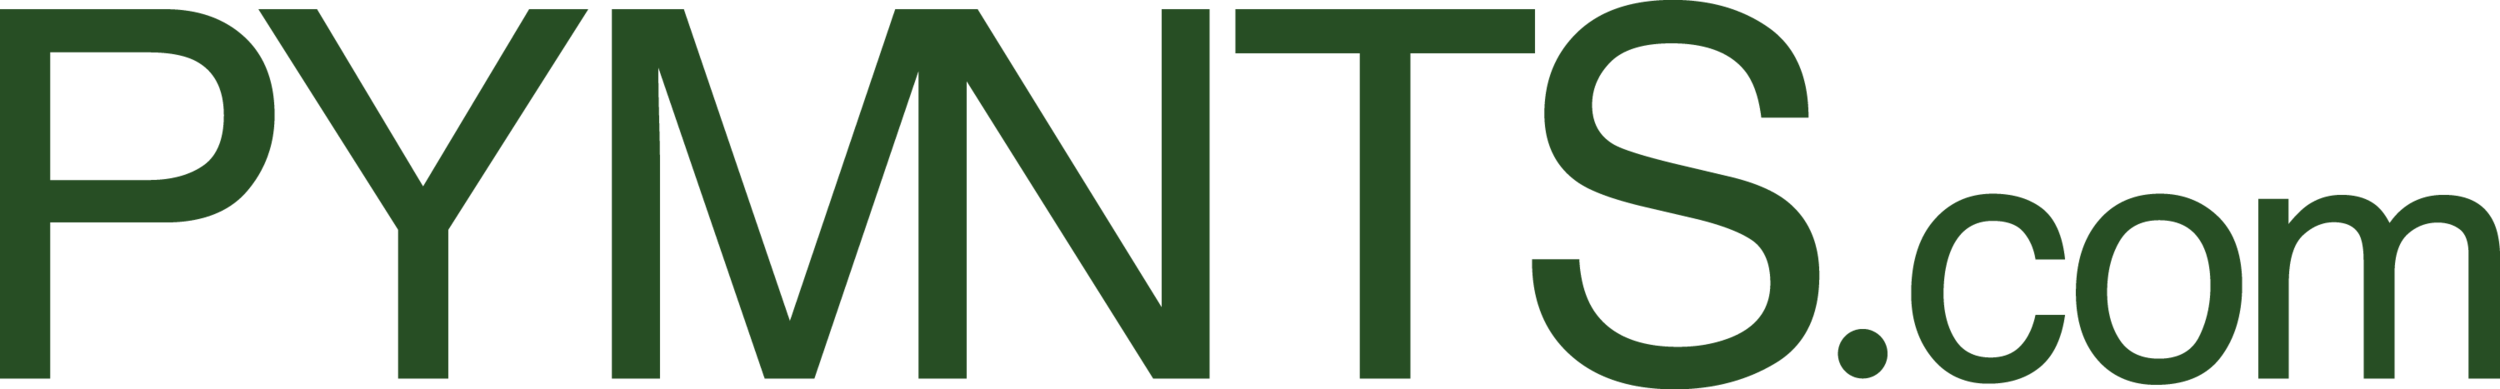 PYMNTS-logo-green.png